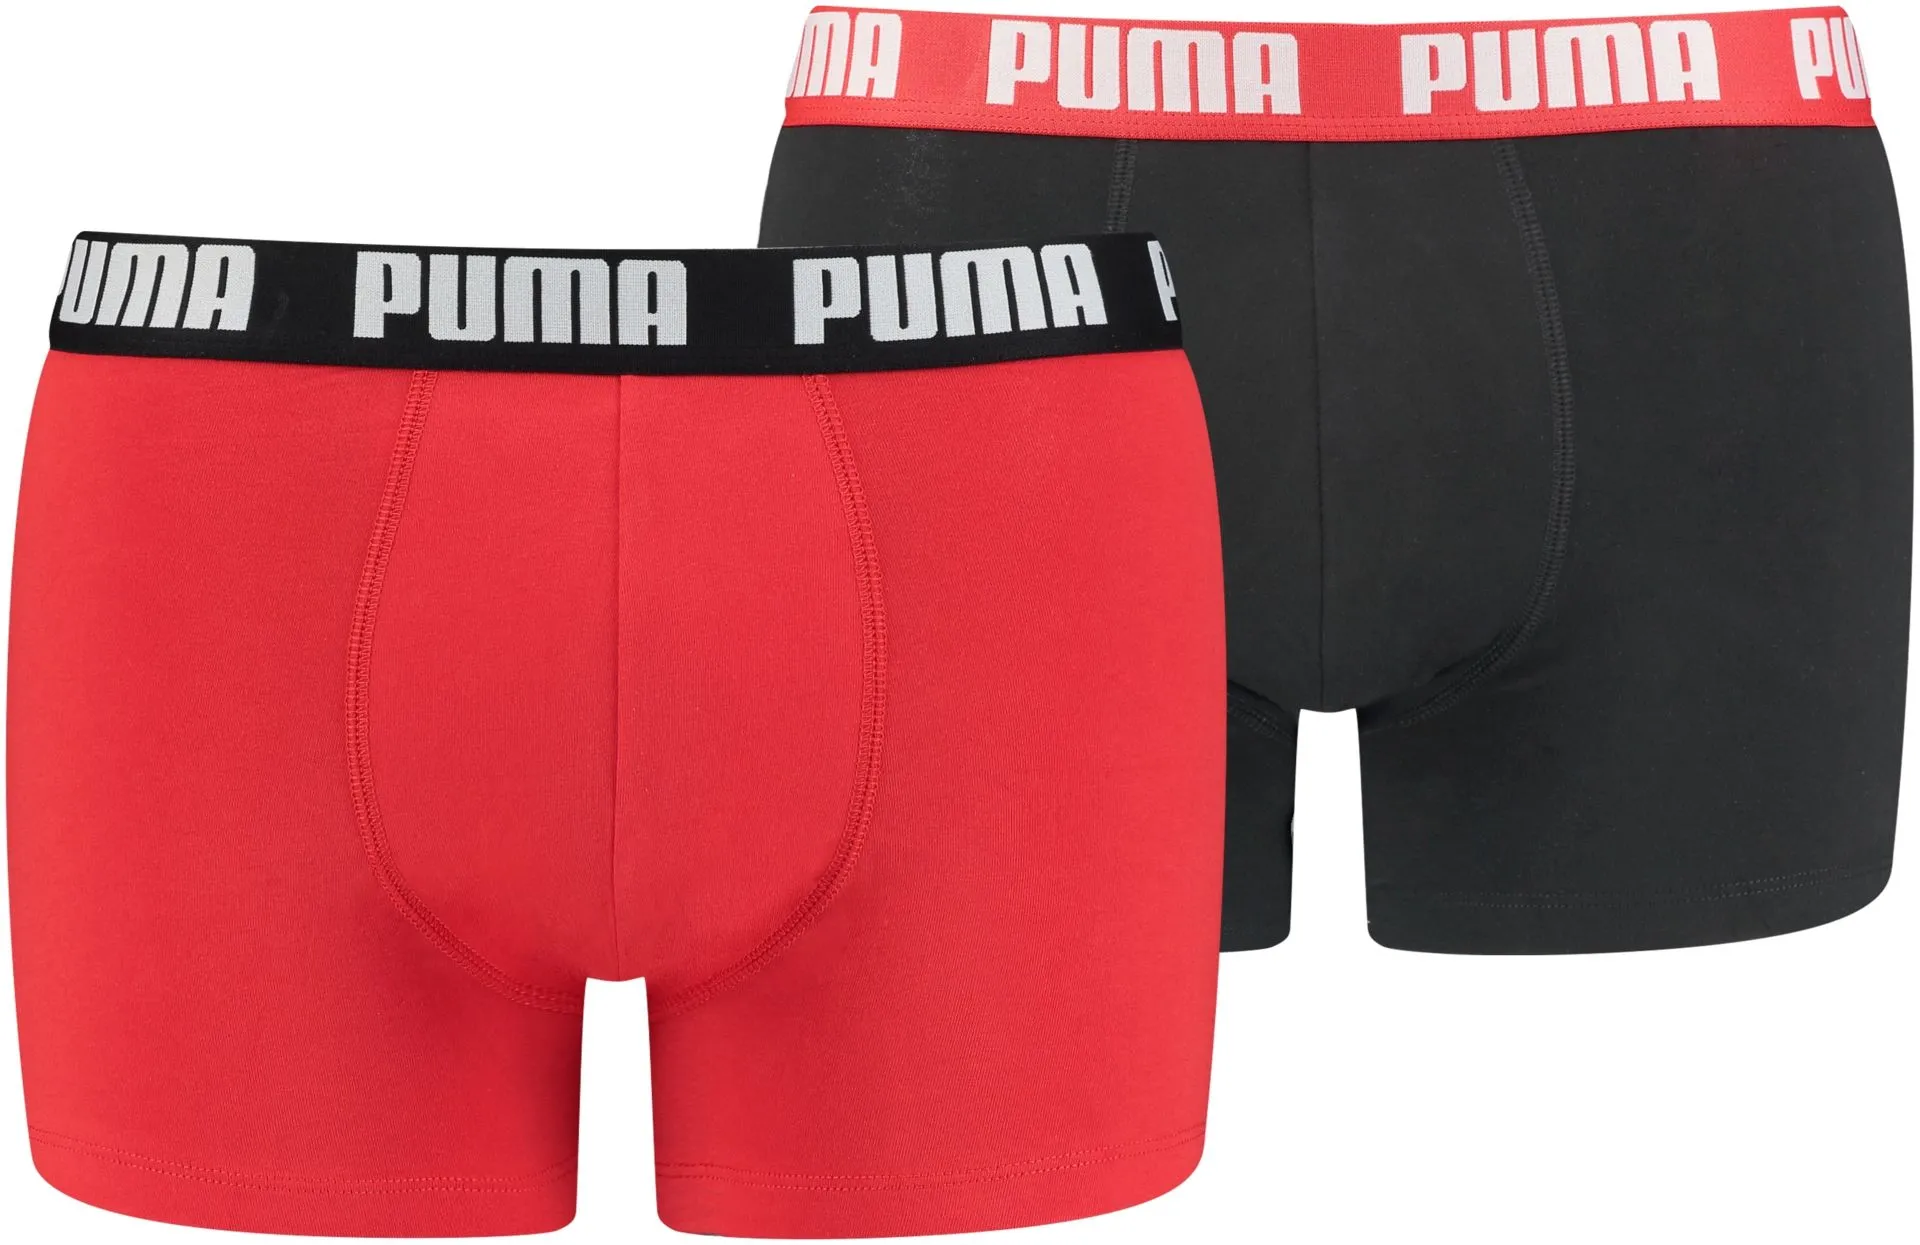 Puma miesten bokserit  2-pack Basic - Red / black - 1